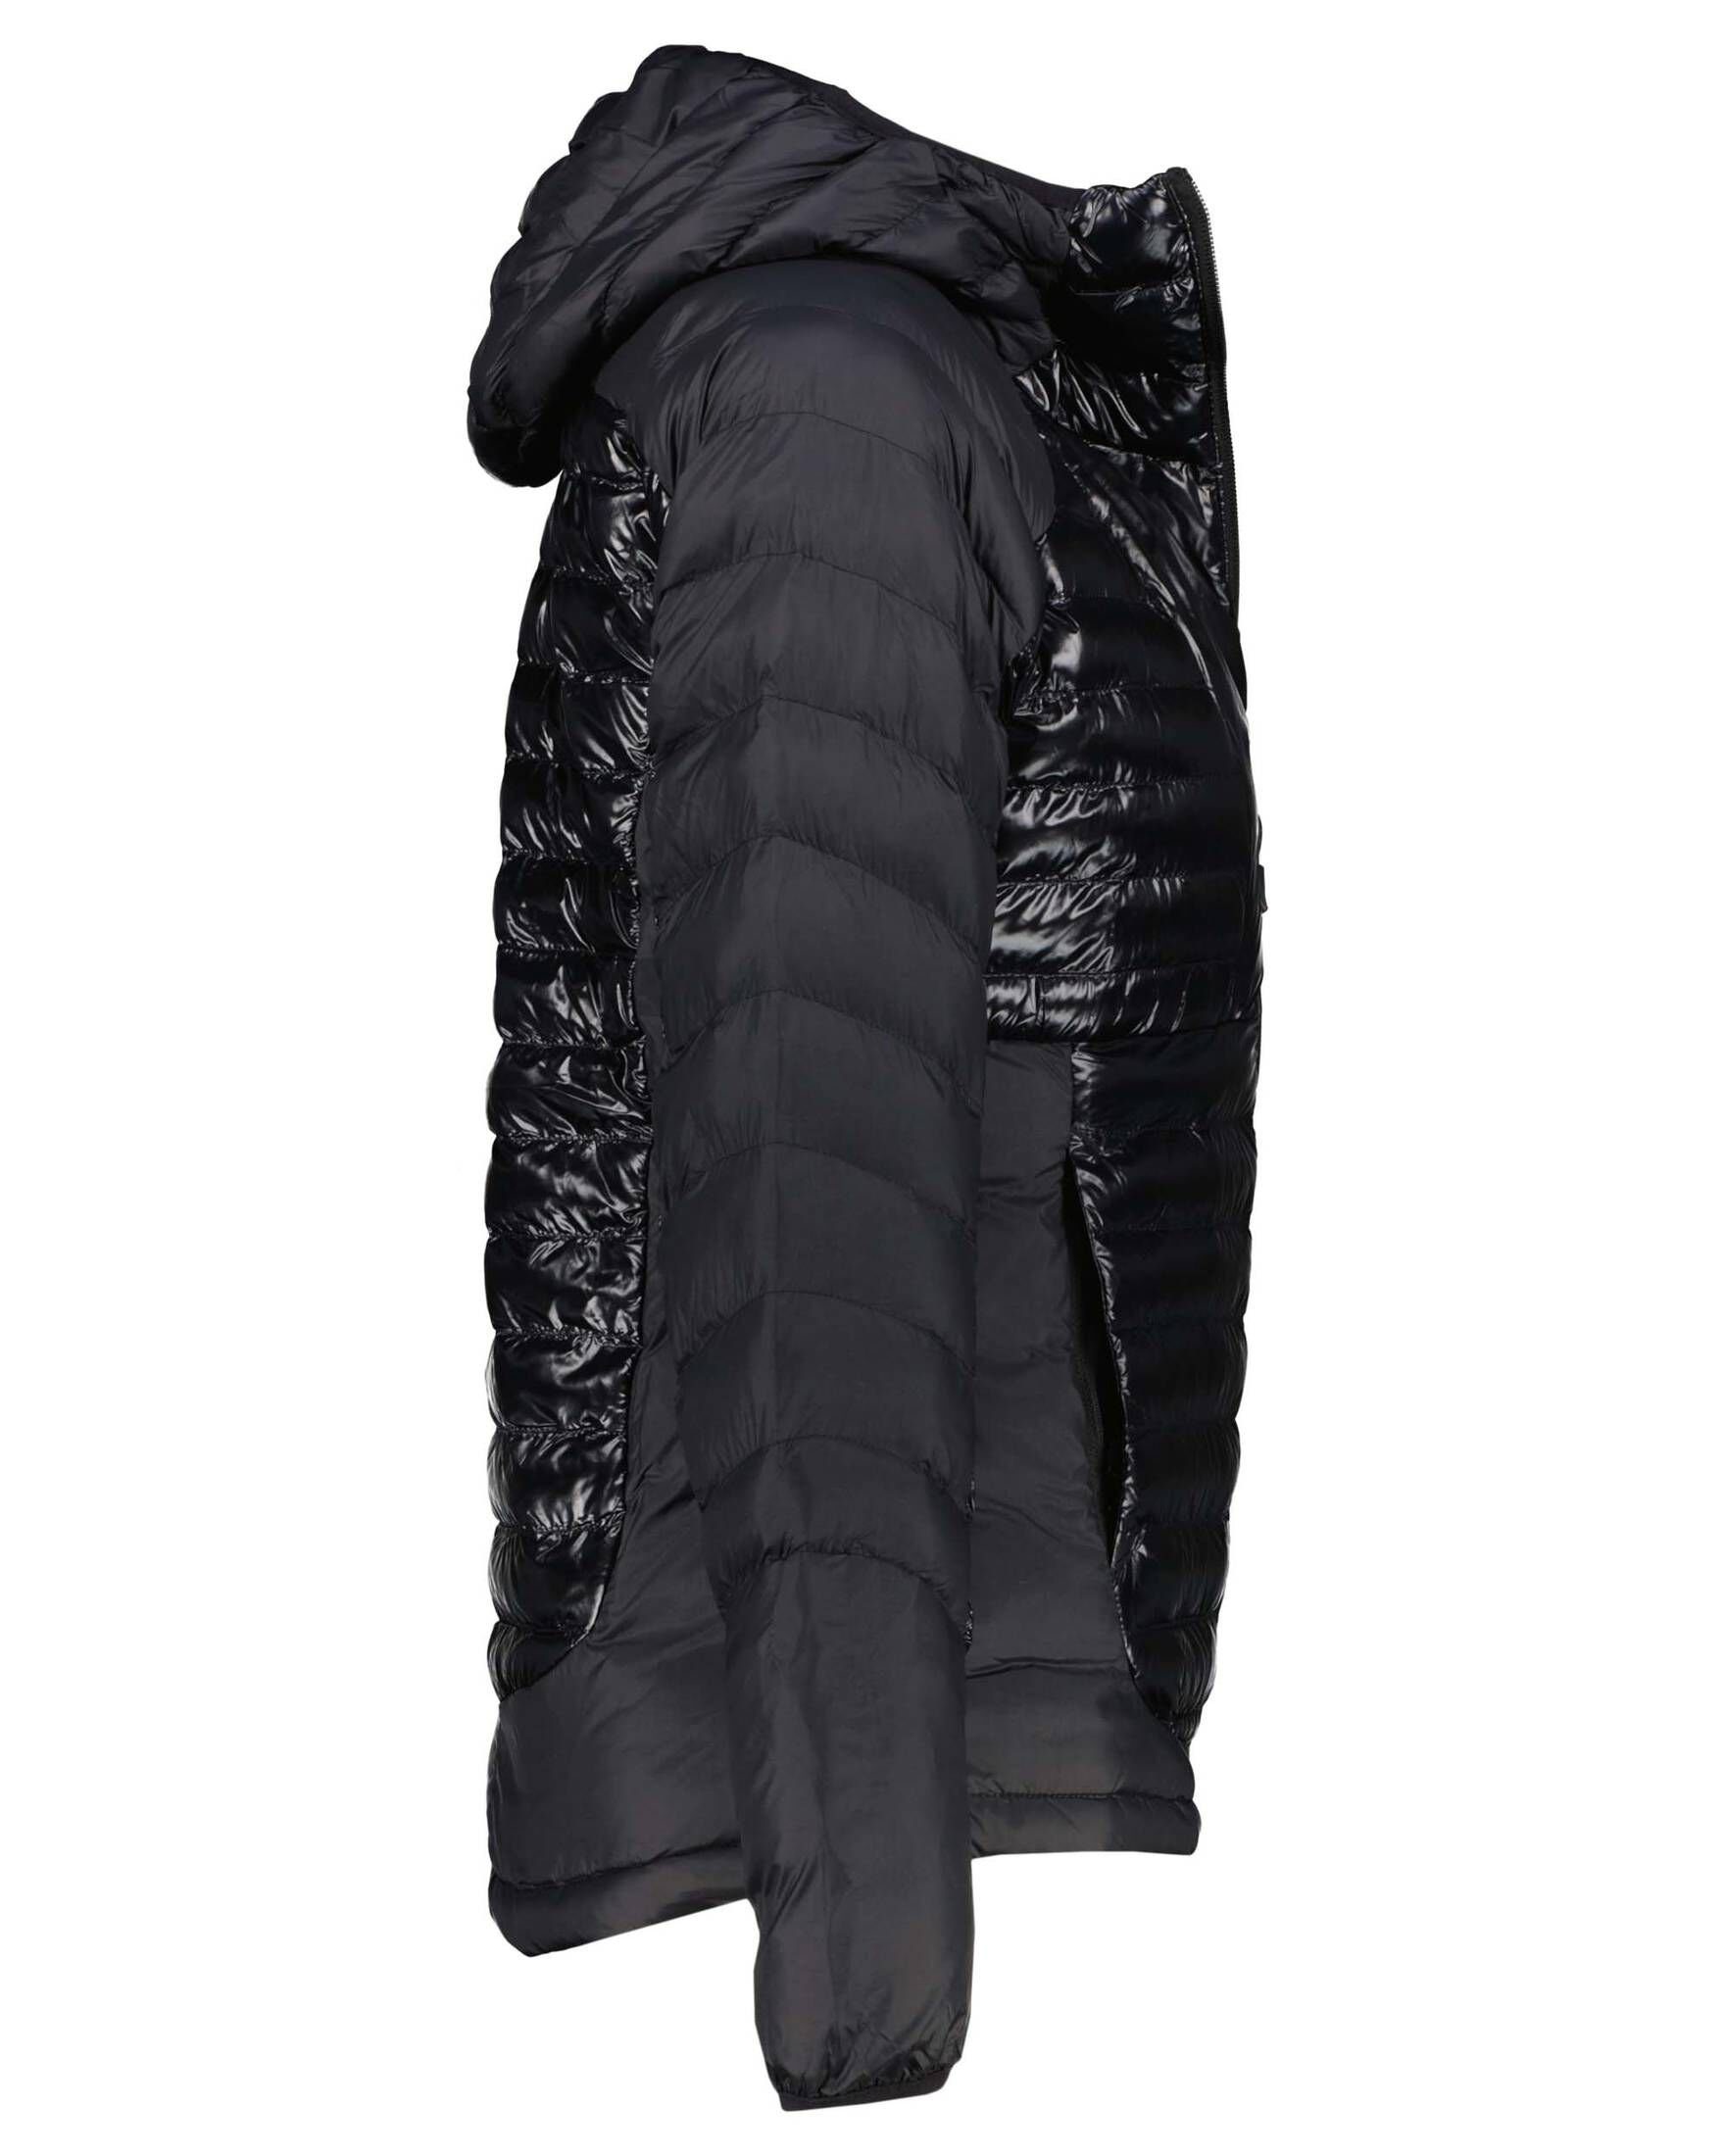 LABYRINTH Damen LOOP Columbia (200) schwarz Freizeitjacke Winterjacke